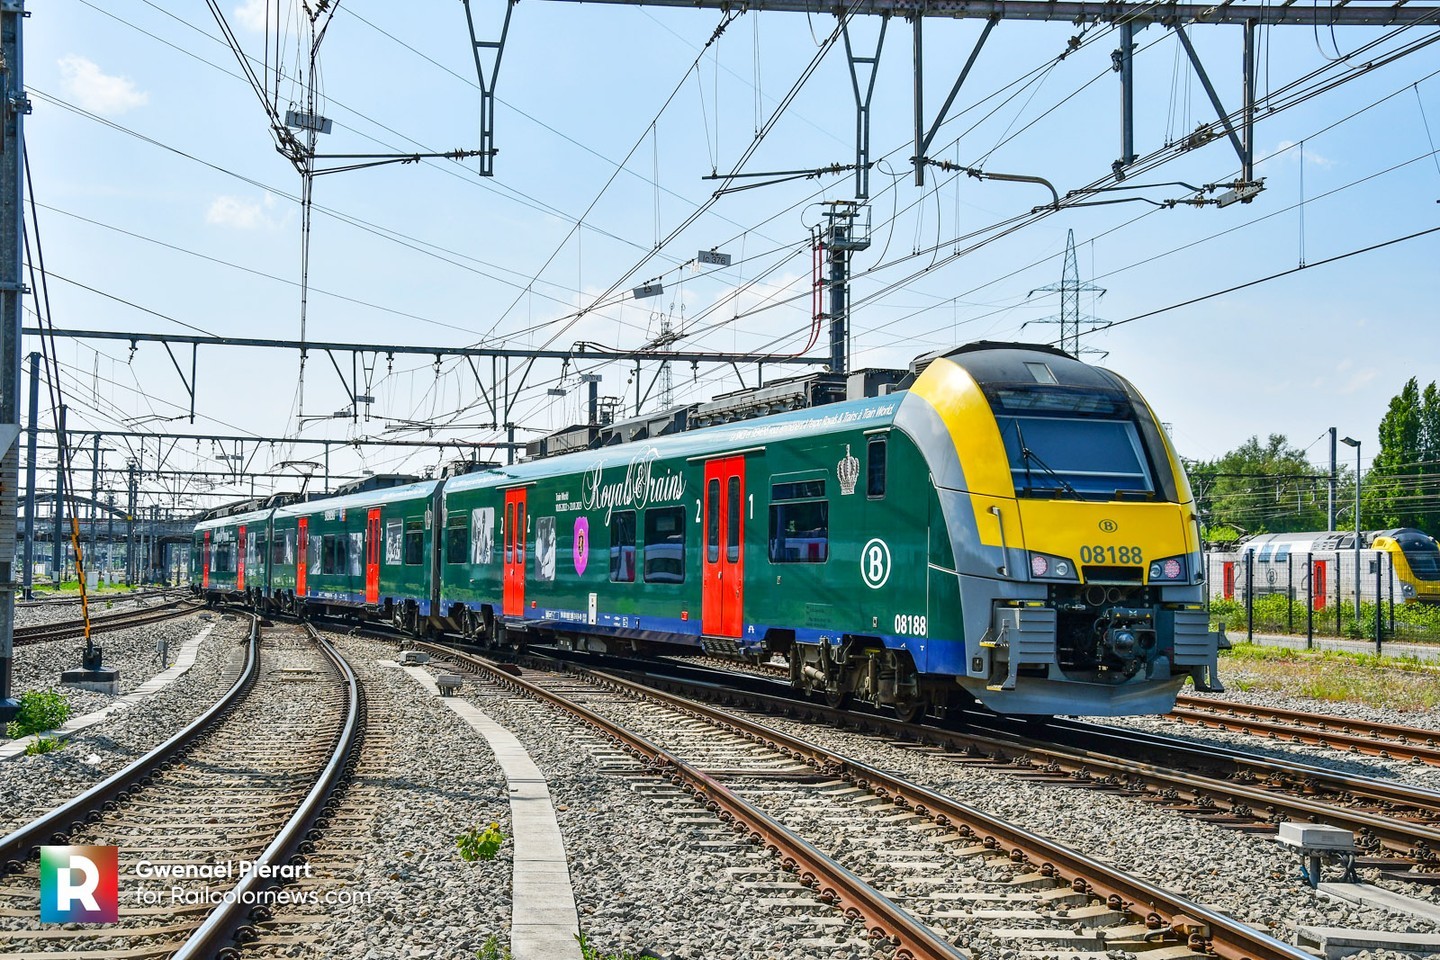 📷 by Gwenaël Piérart 🇧🇪 Train World presents: The “Royals & Trains” Desiro ⬆️ Read more on RailcolorNews.com
.
.
.
.
#Siemens #Desiro #SiemensDesiro #DesiroML #SNCB #SiemensDesiroML #TrainWorld #Royals&Trains #royalsandtrains #railwayphotography #trains_in_belgium #railcolornews #railcolor #belgiantrain #spoorleven #spoor #spoorlijn #belgischespoorwegen #trein #spoorleven #train #ferroviaire #nationalrailwaymuseum #belgie #cheminsdefer #trains_of_our_world #nmbs #081088 #Schaerbeek